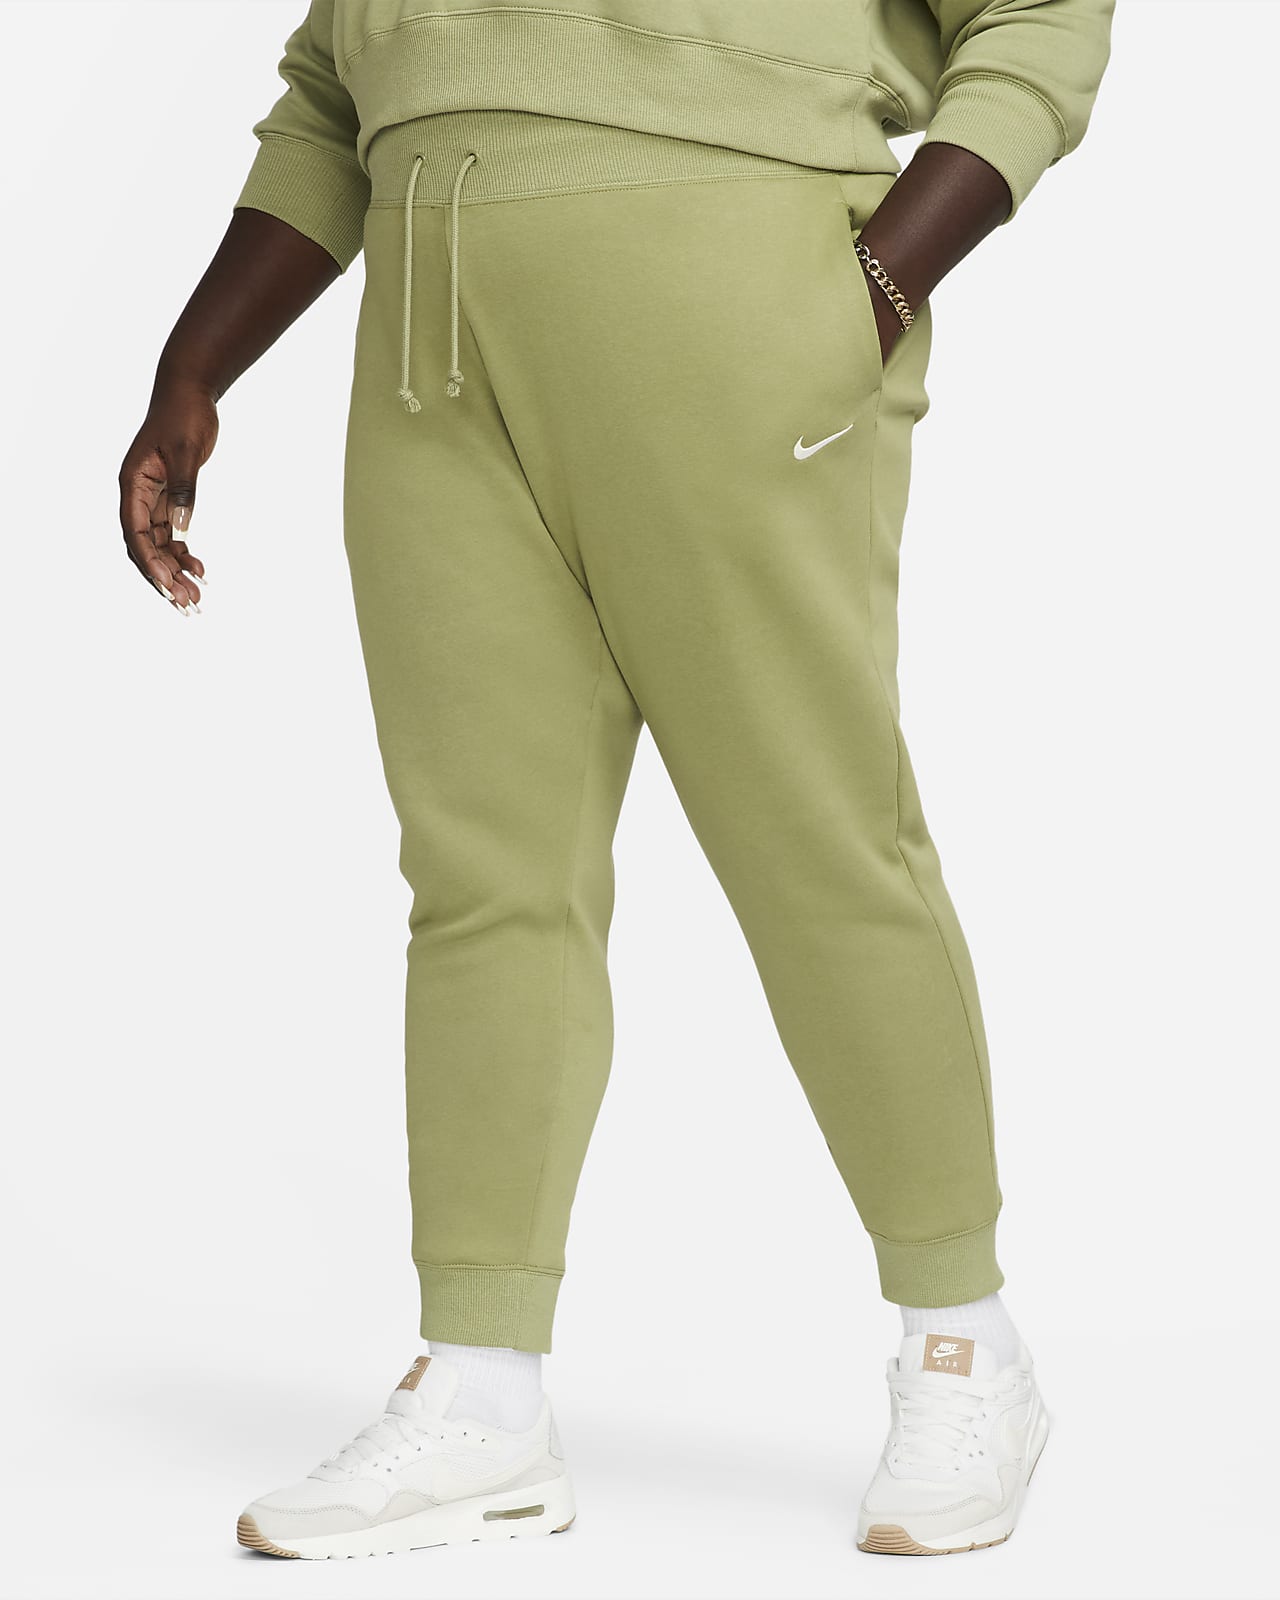 Nike Essentials Fleece cuffed cargo sweatpants in olive green